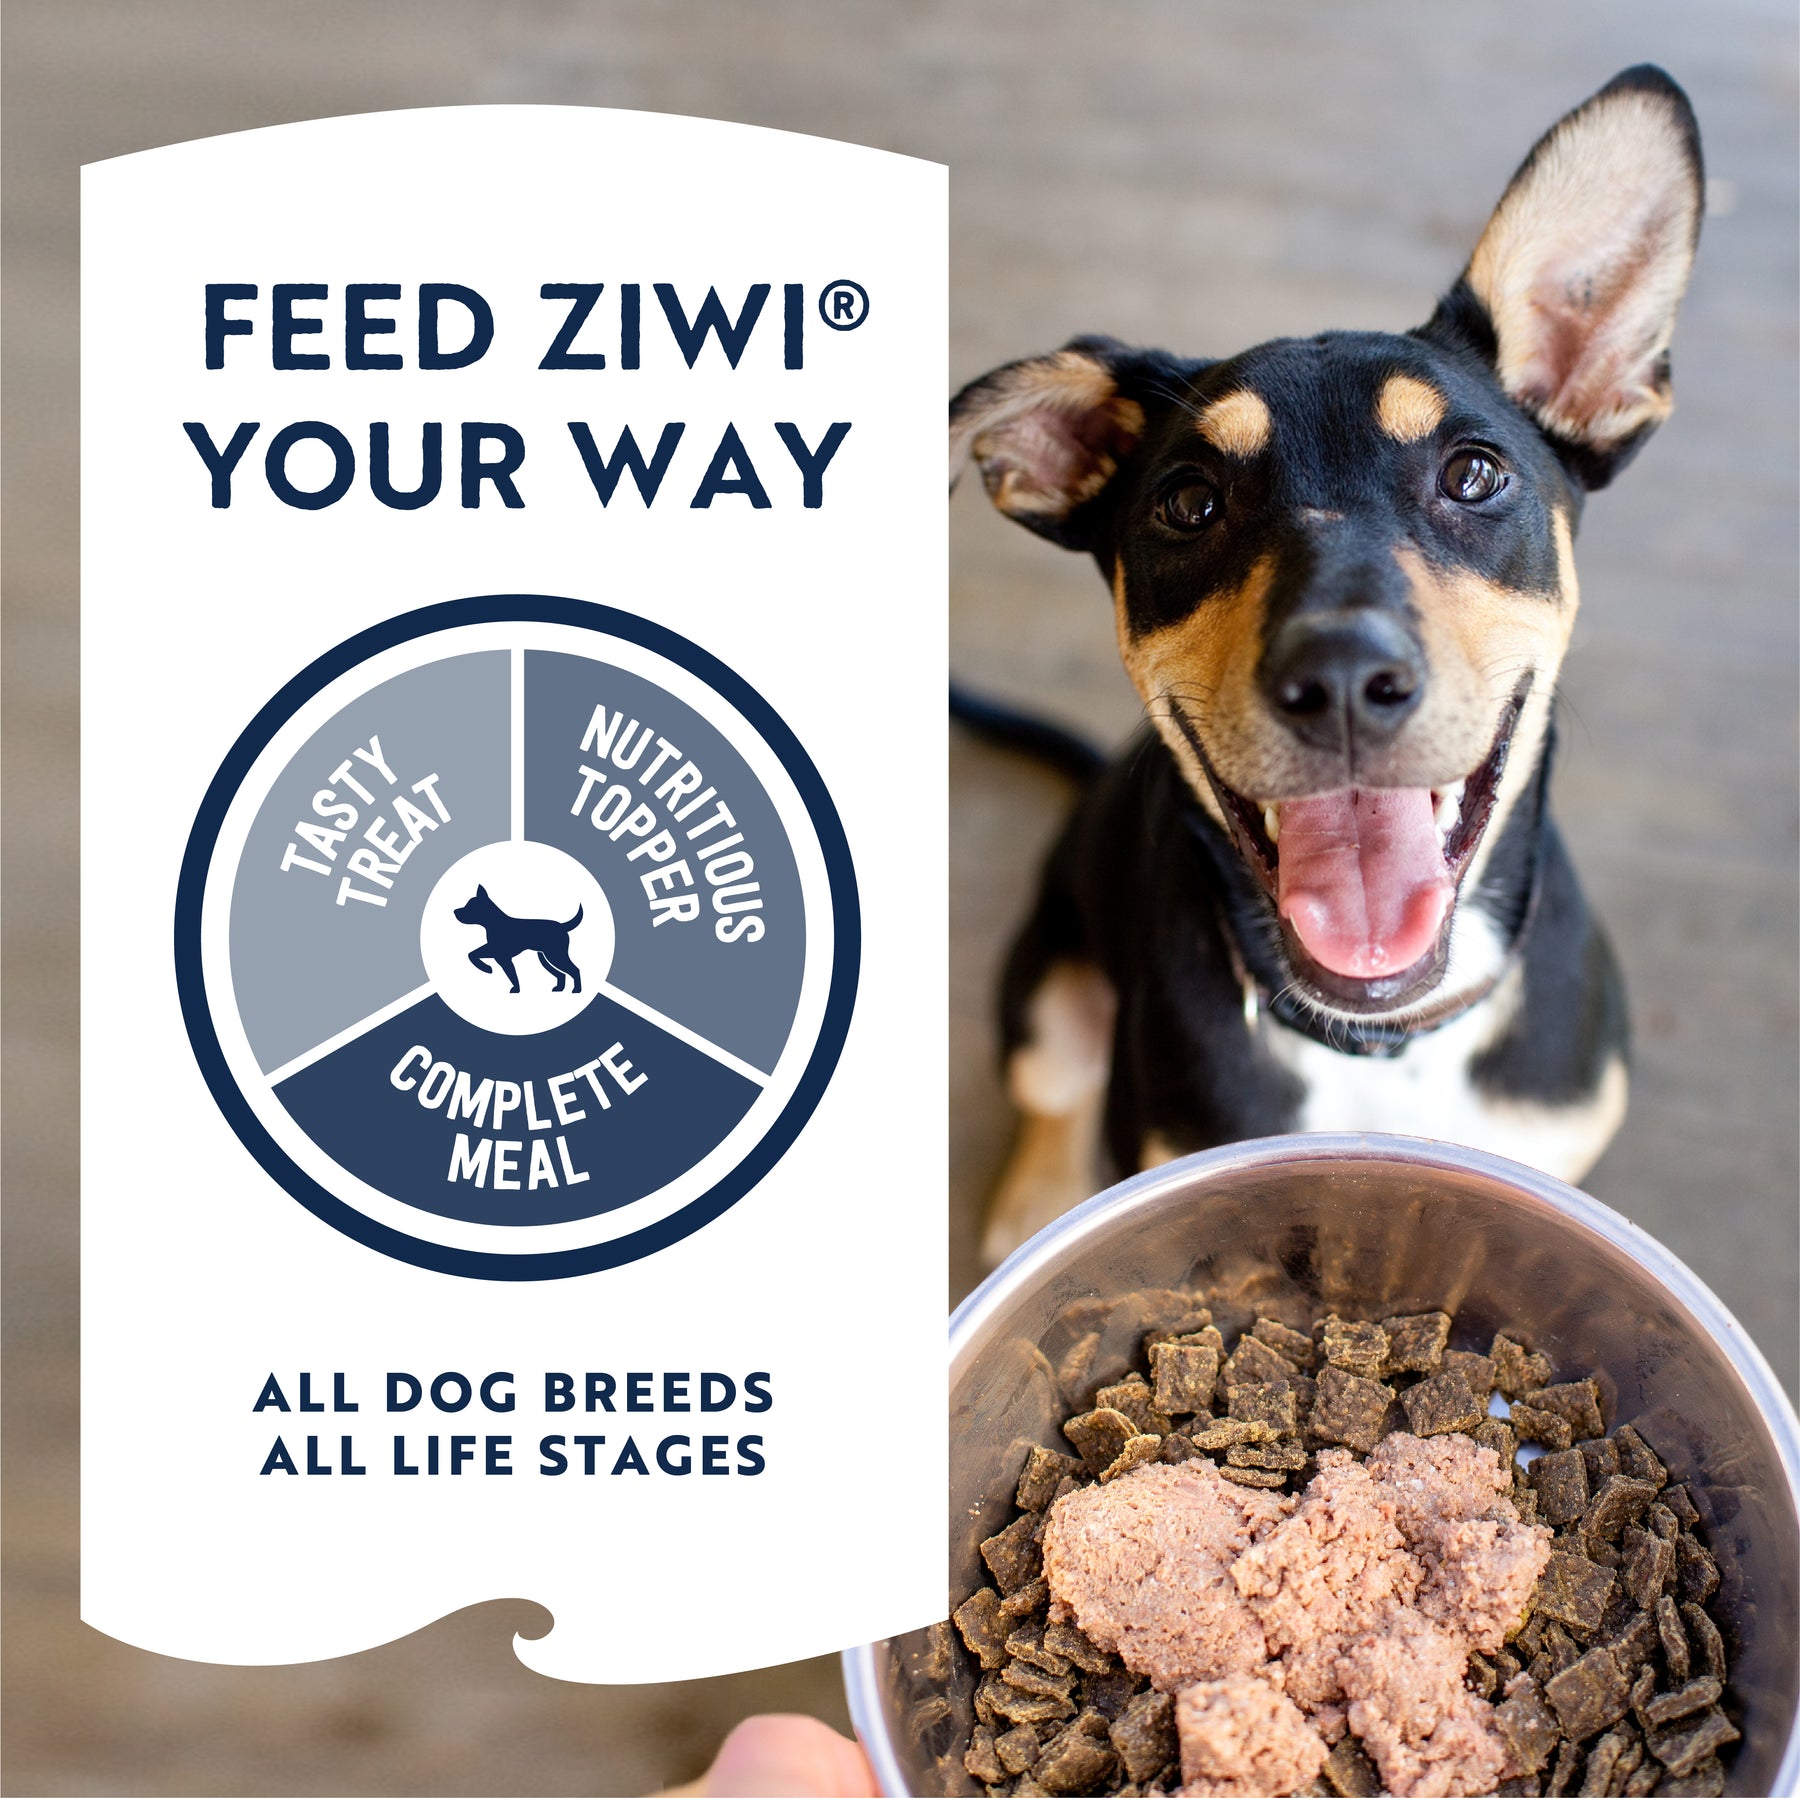 Ziwi Dog Beef Can